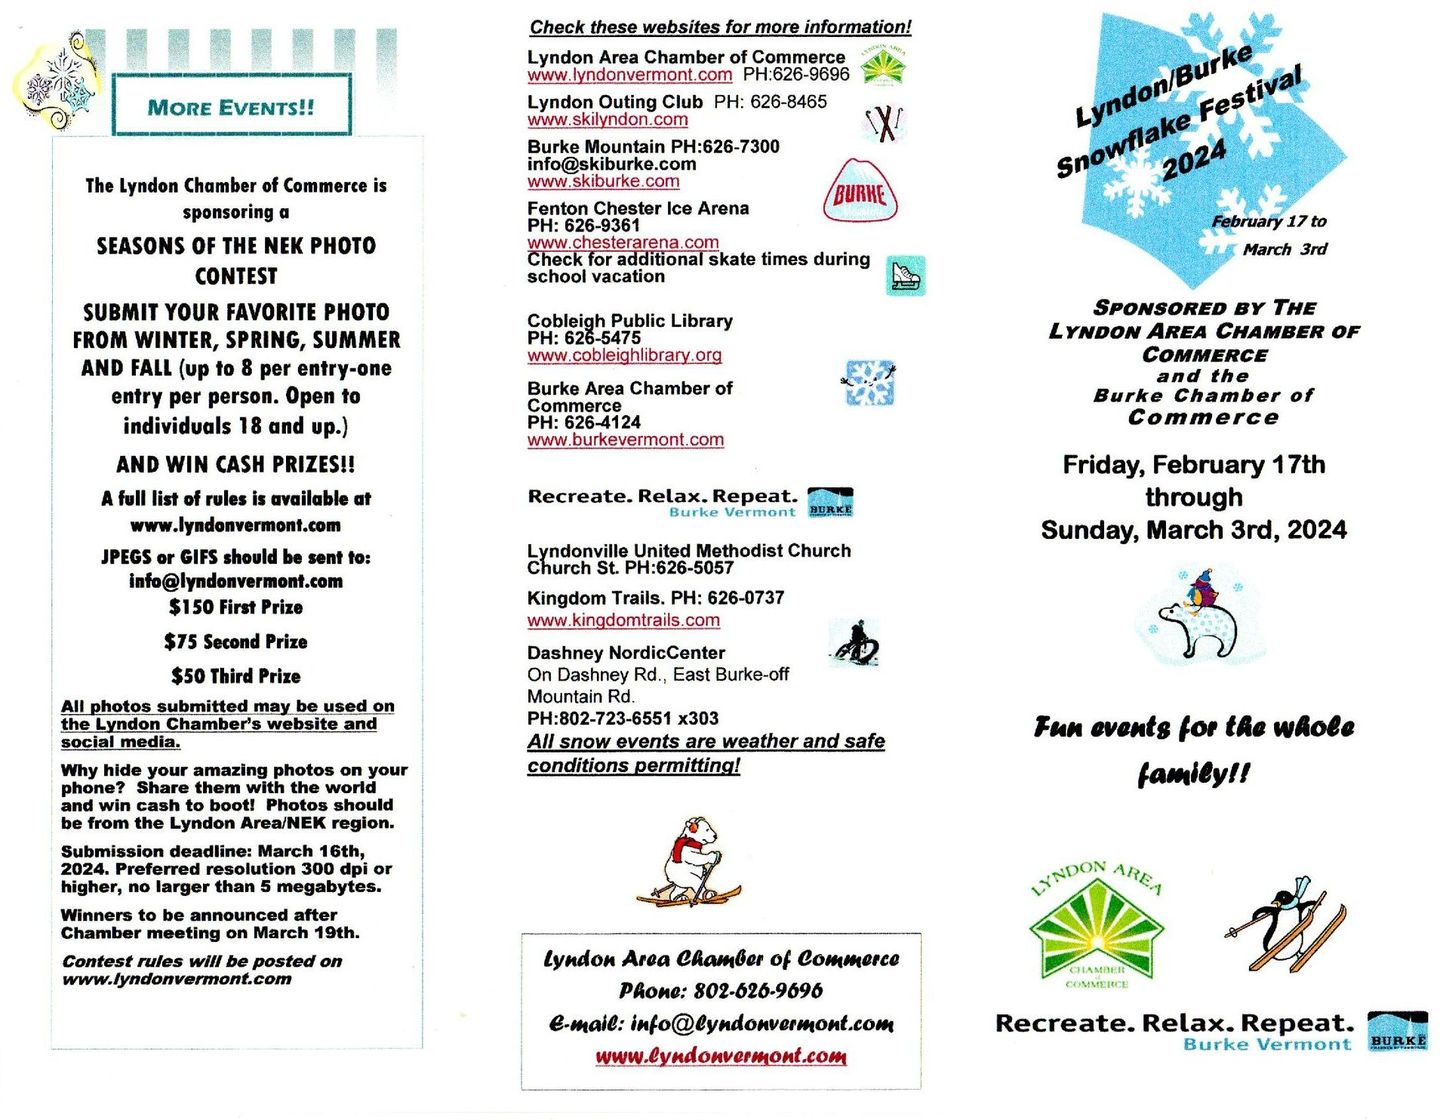 Lyndon Burke Vermont 2024 Snowflake Festival Flyer page 1